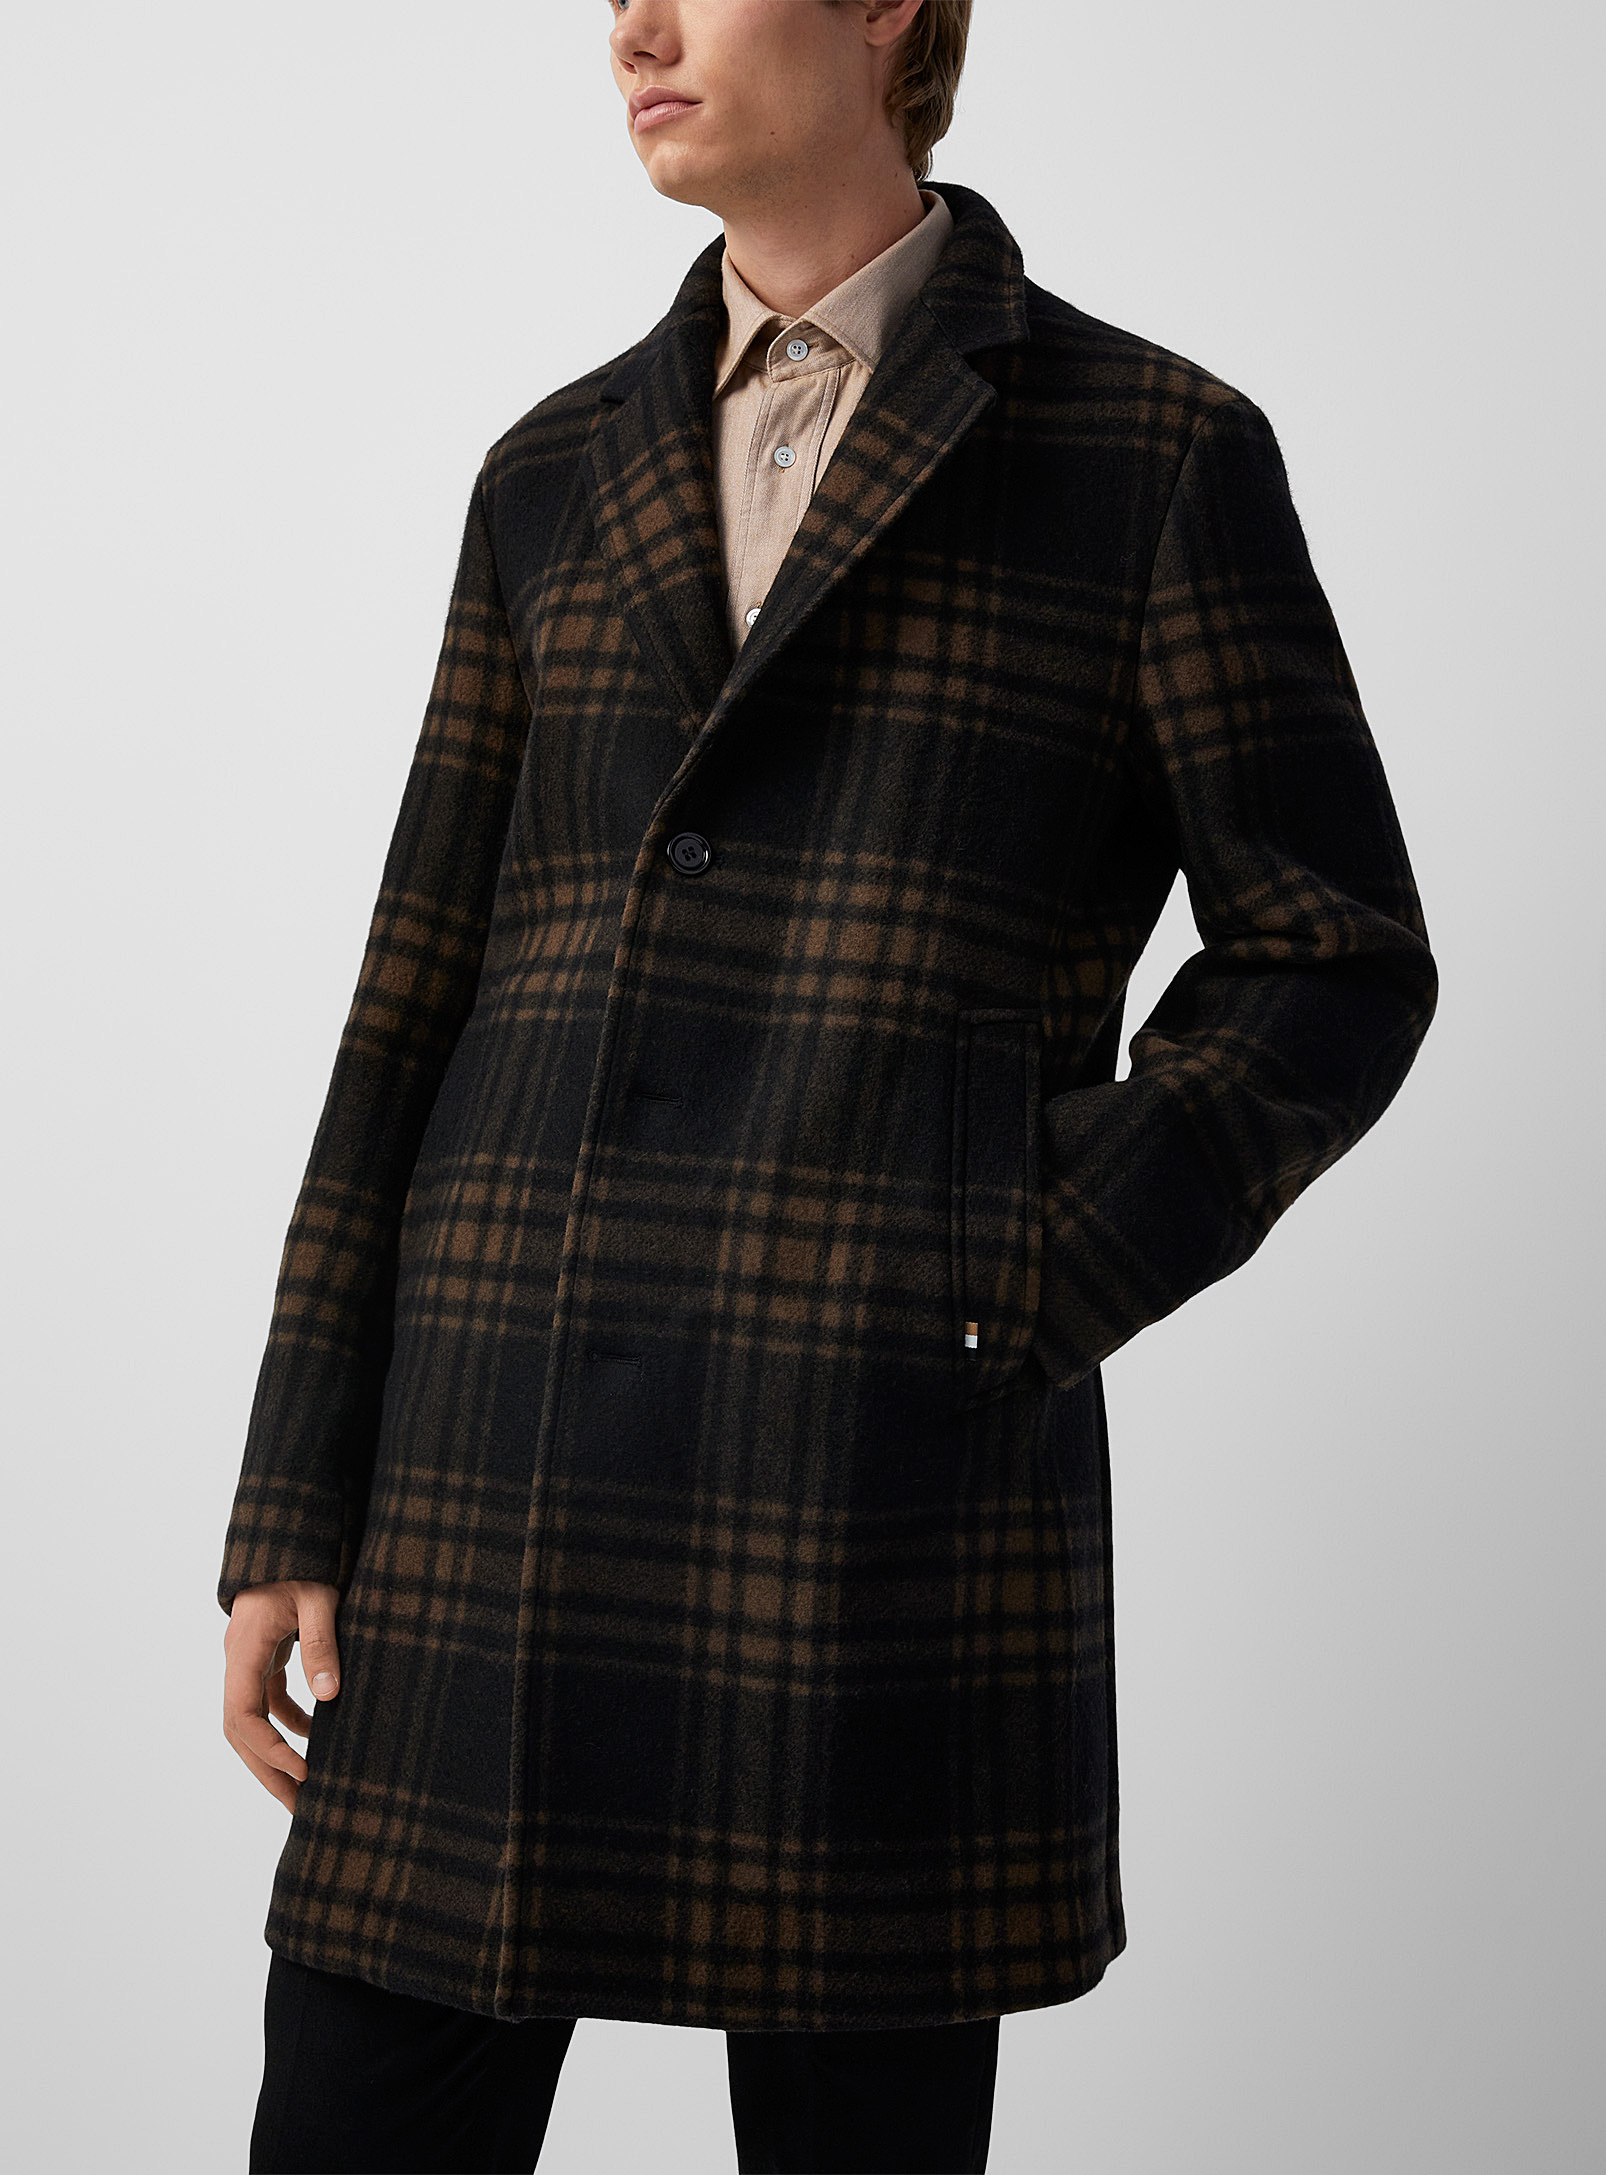 Hugo Boss Checkered Wool Overcoat In Light Brown